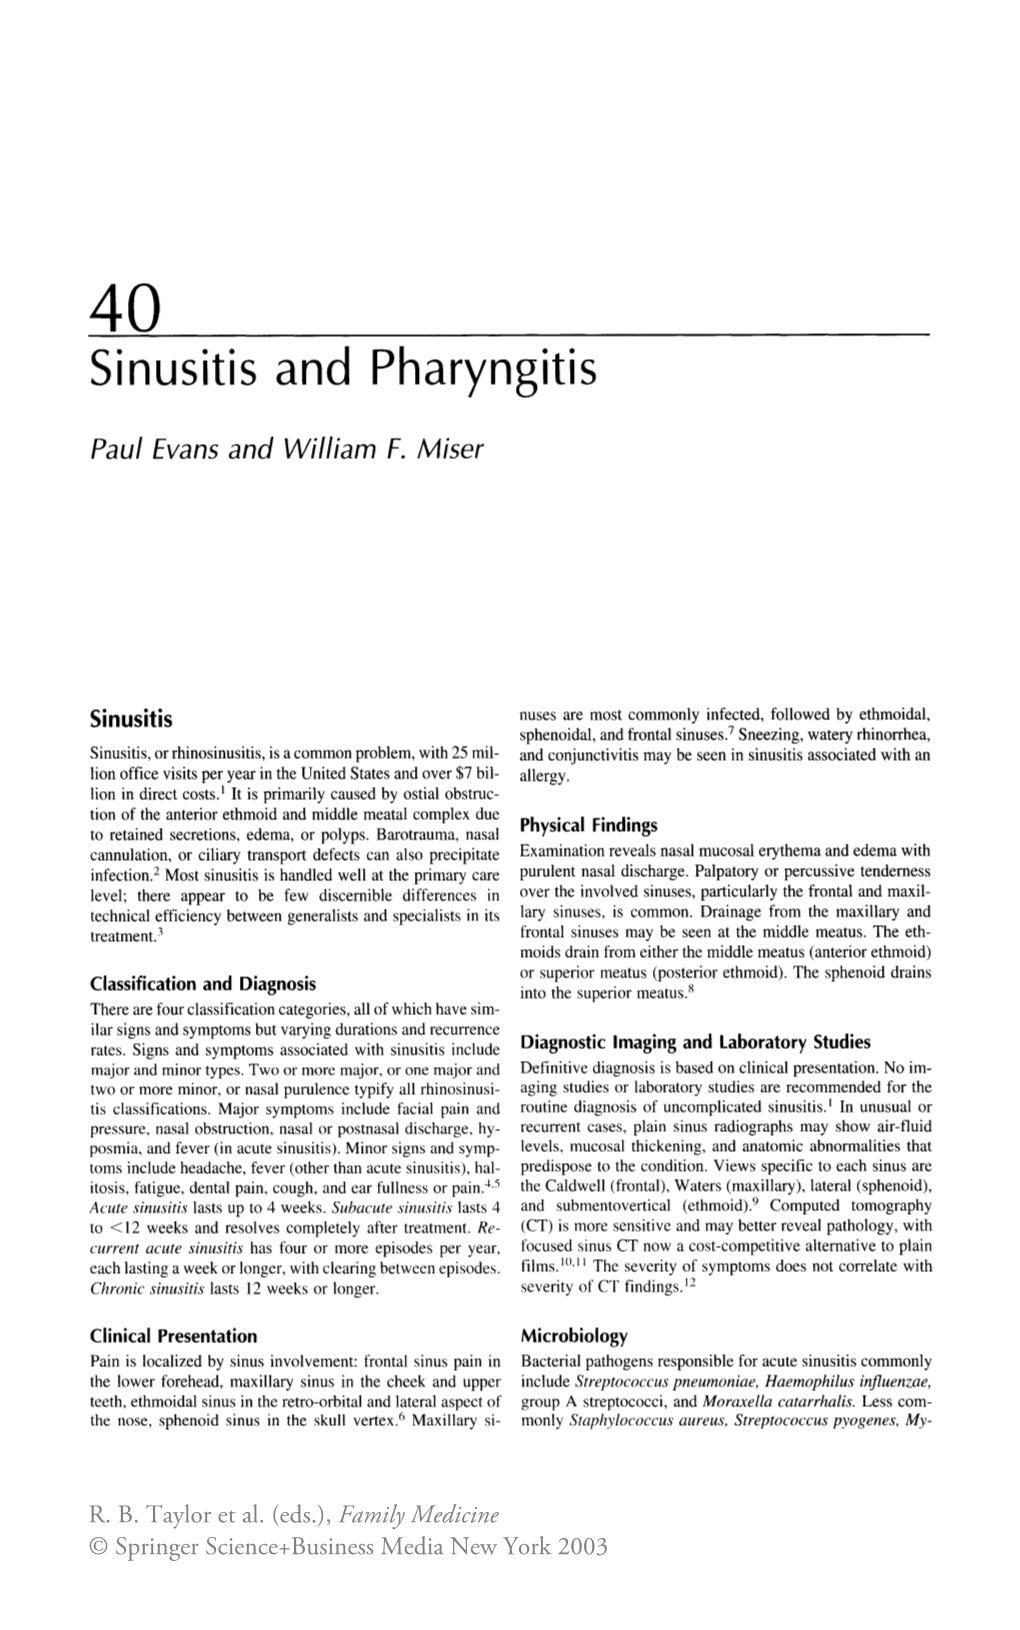 Sinusitis and Pharyngitis